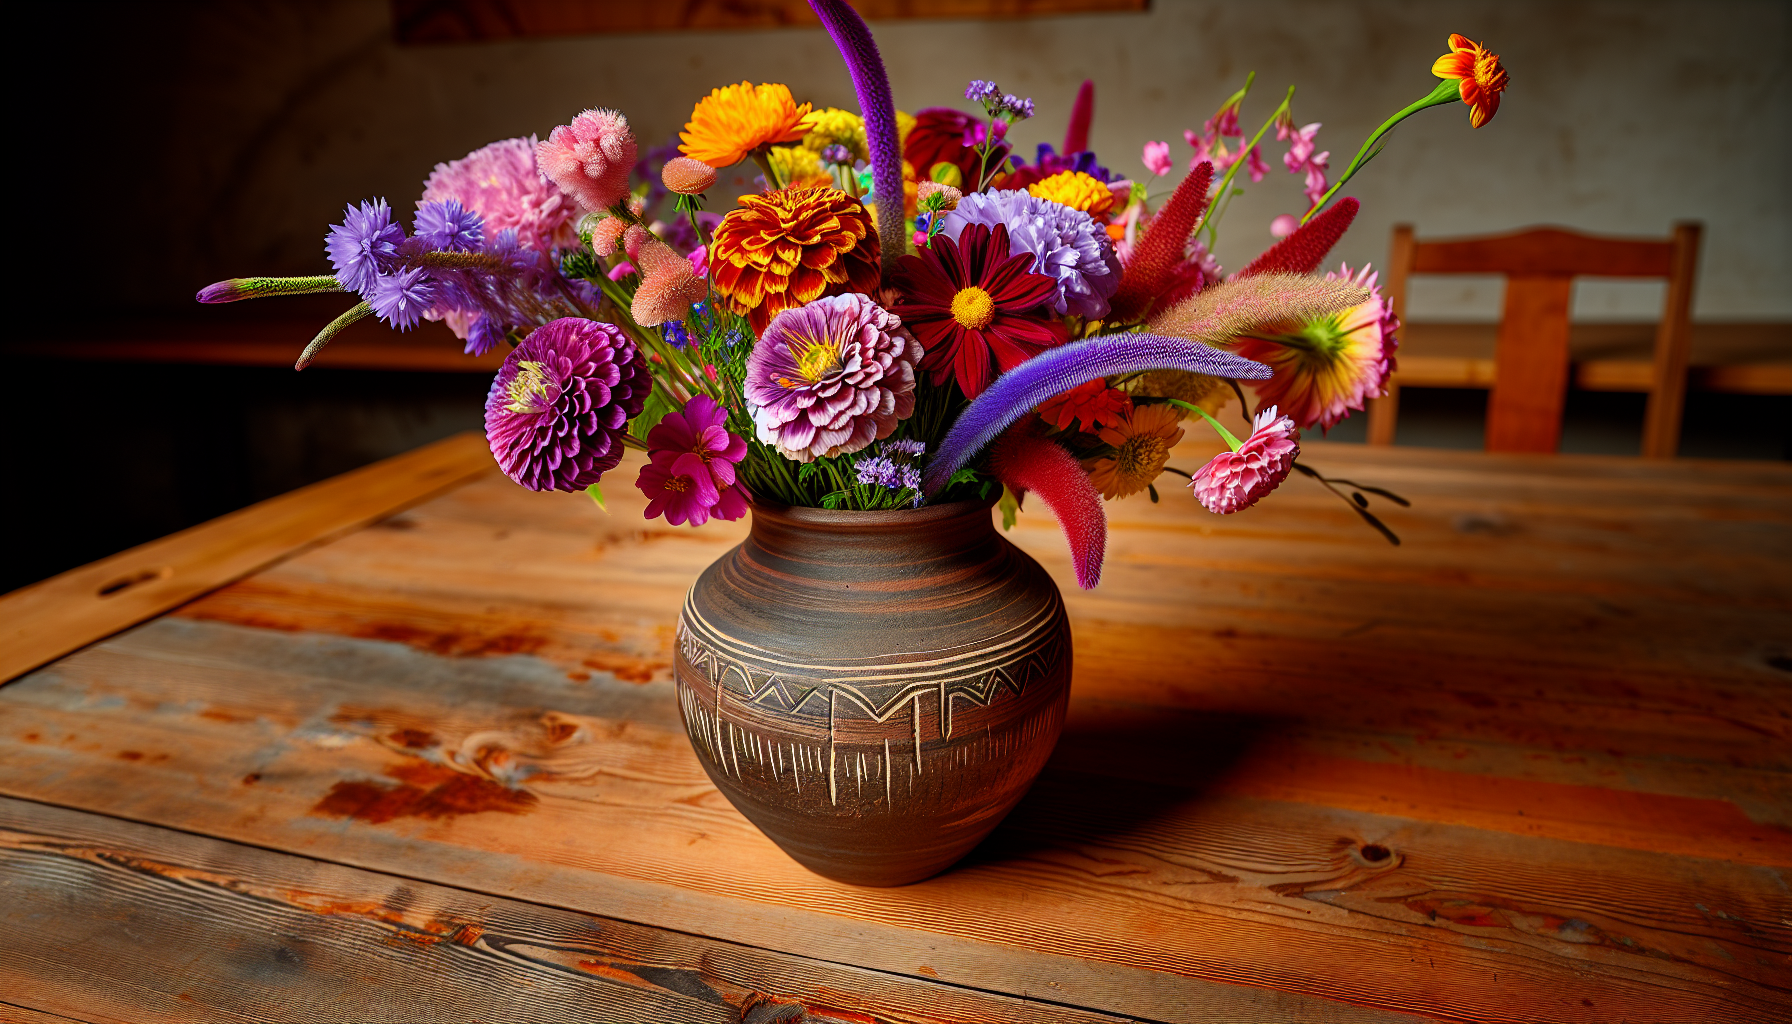 Arrangement of vibrant fresh flowers in a ceramic vase